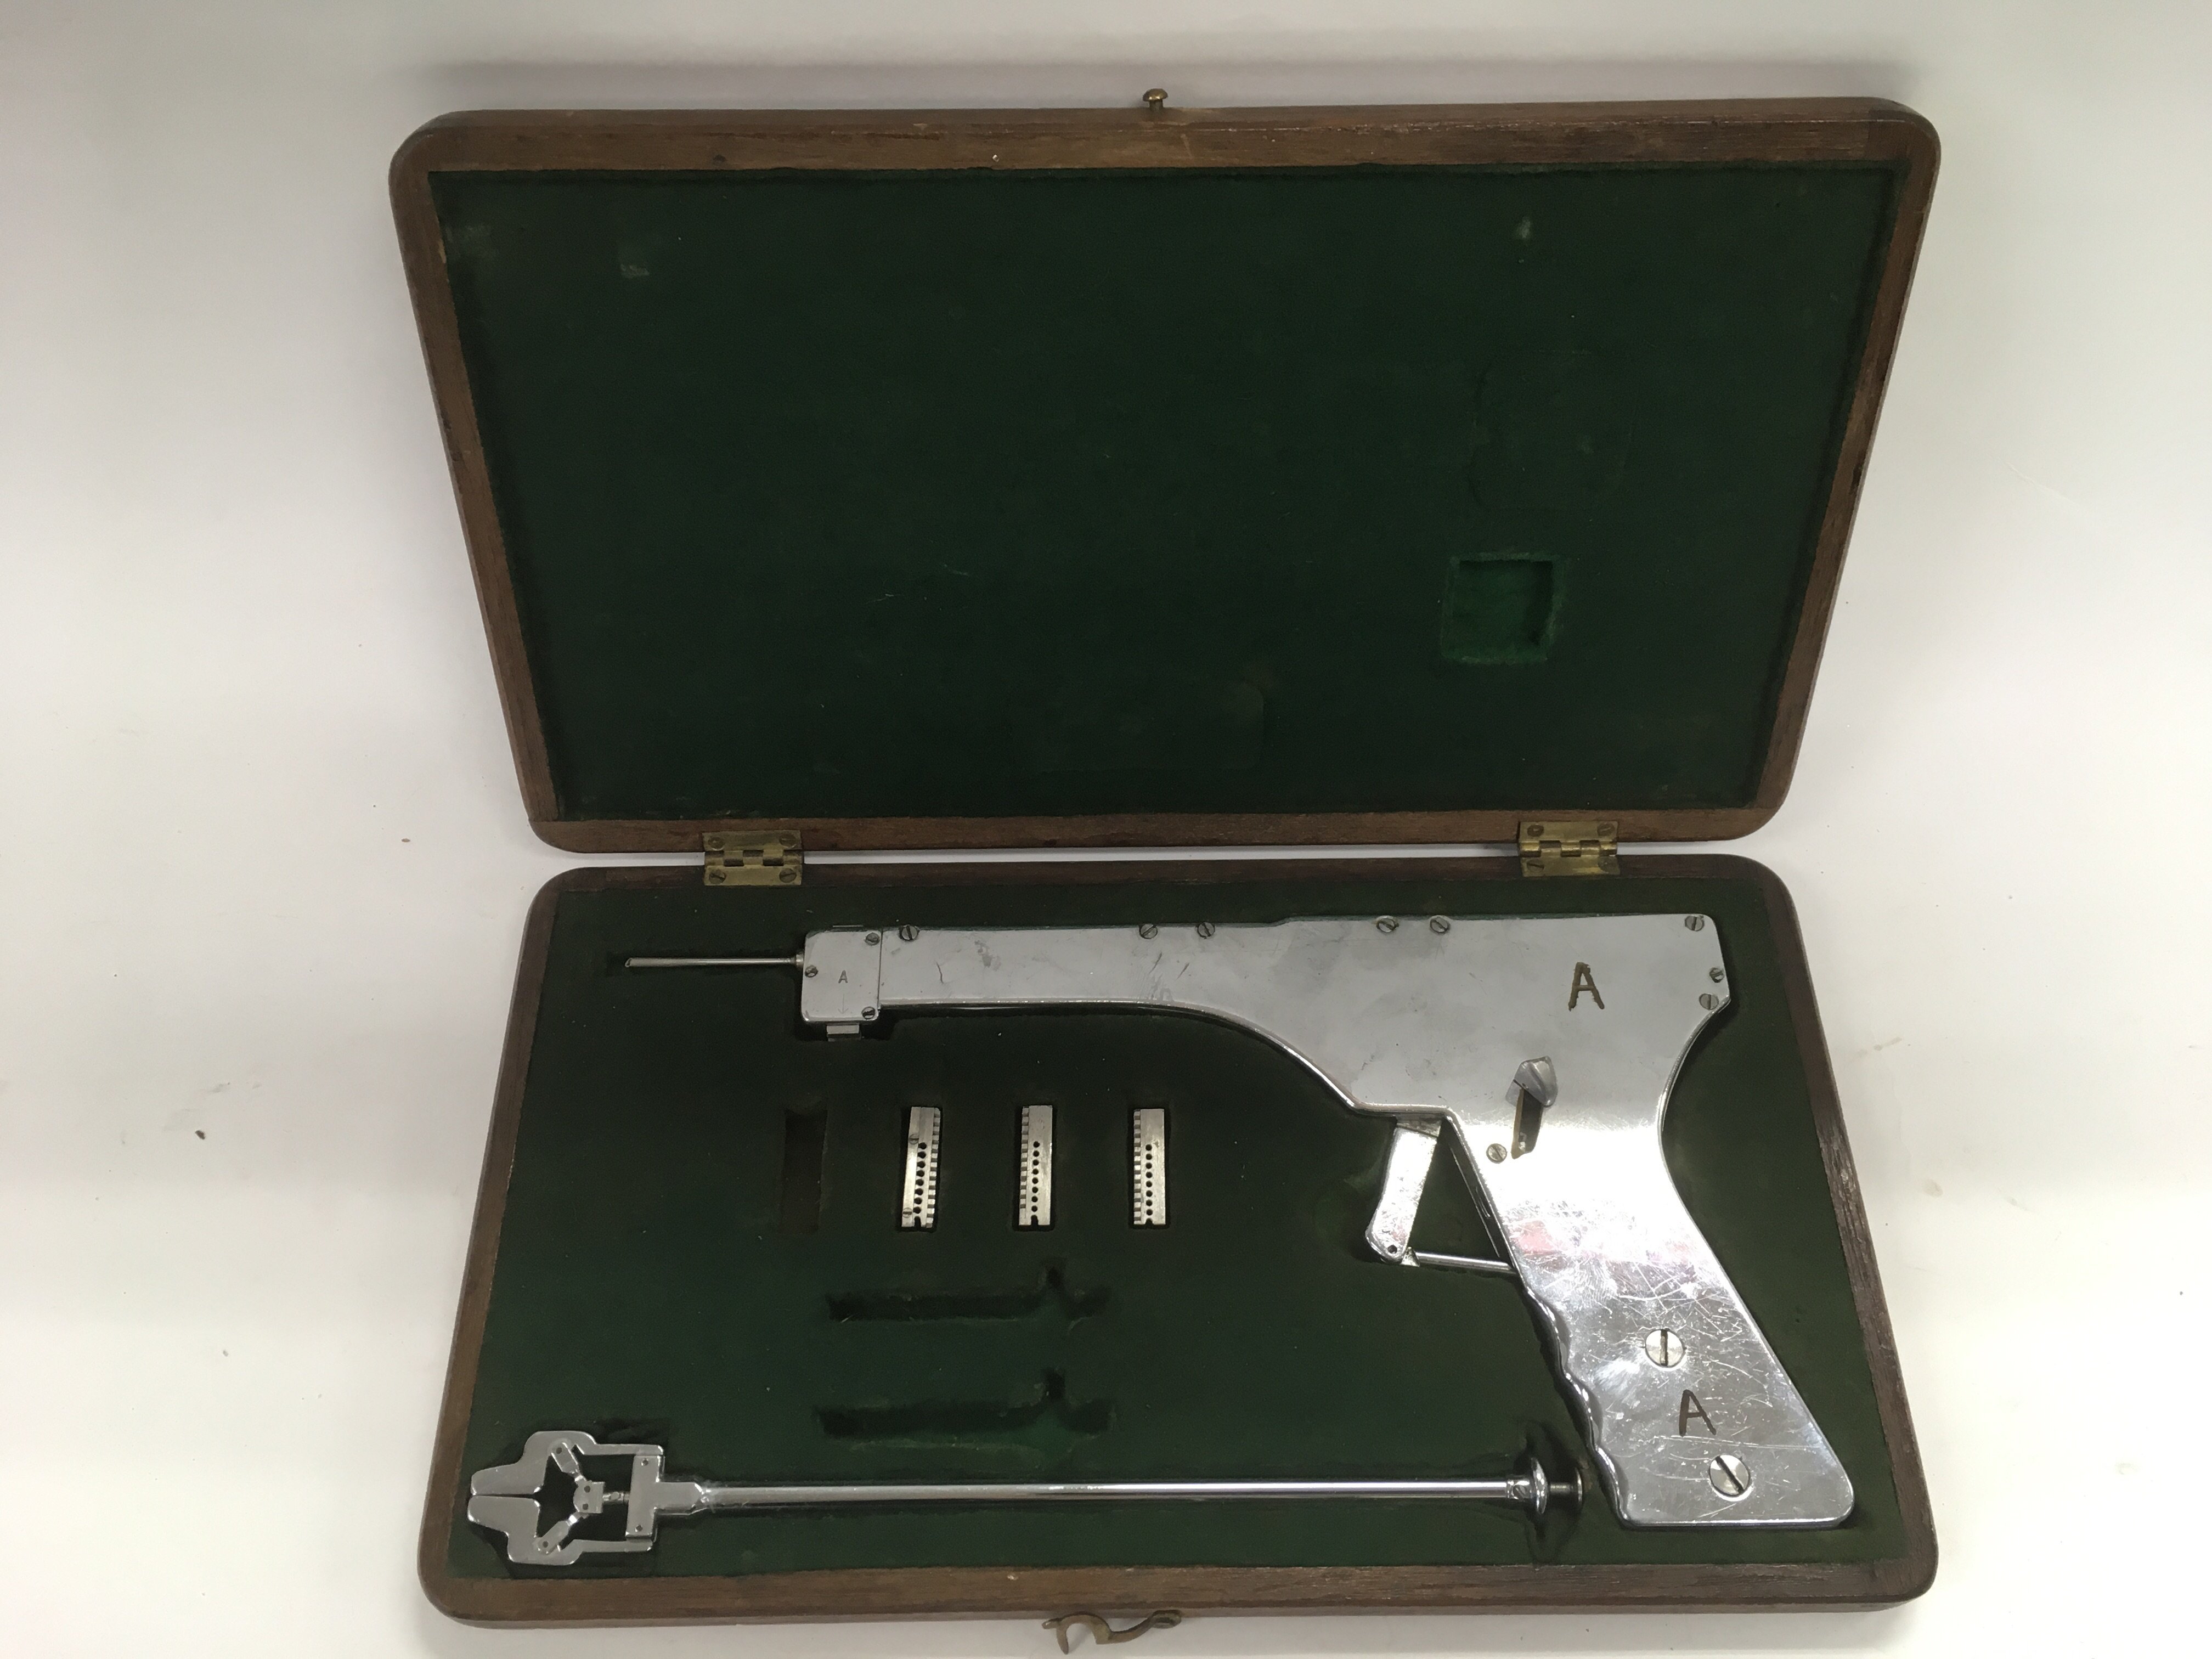 A vintage cased medical instrument, possibly a rad